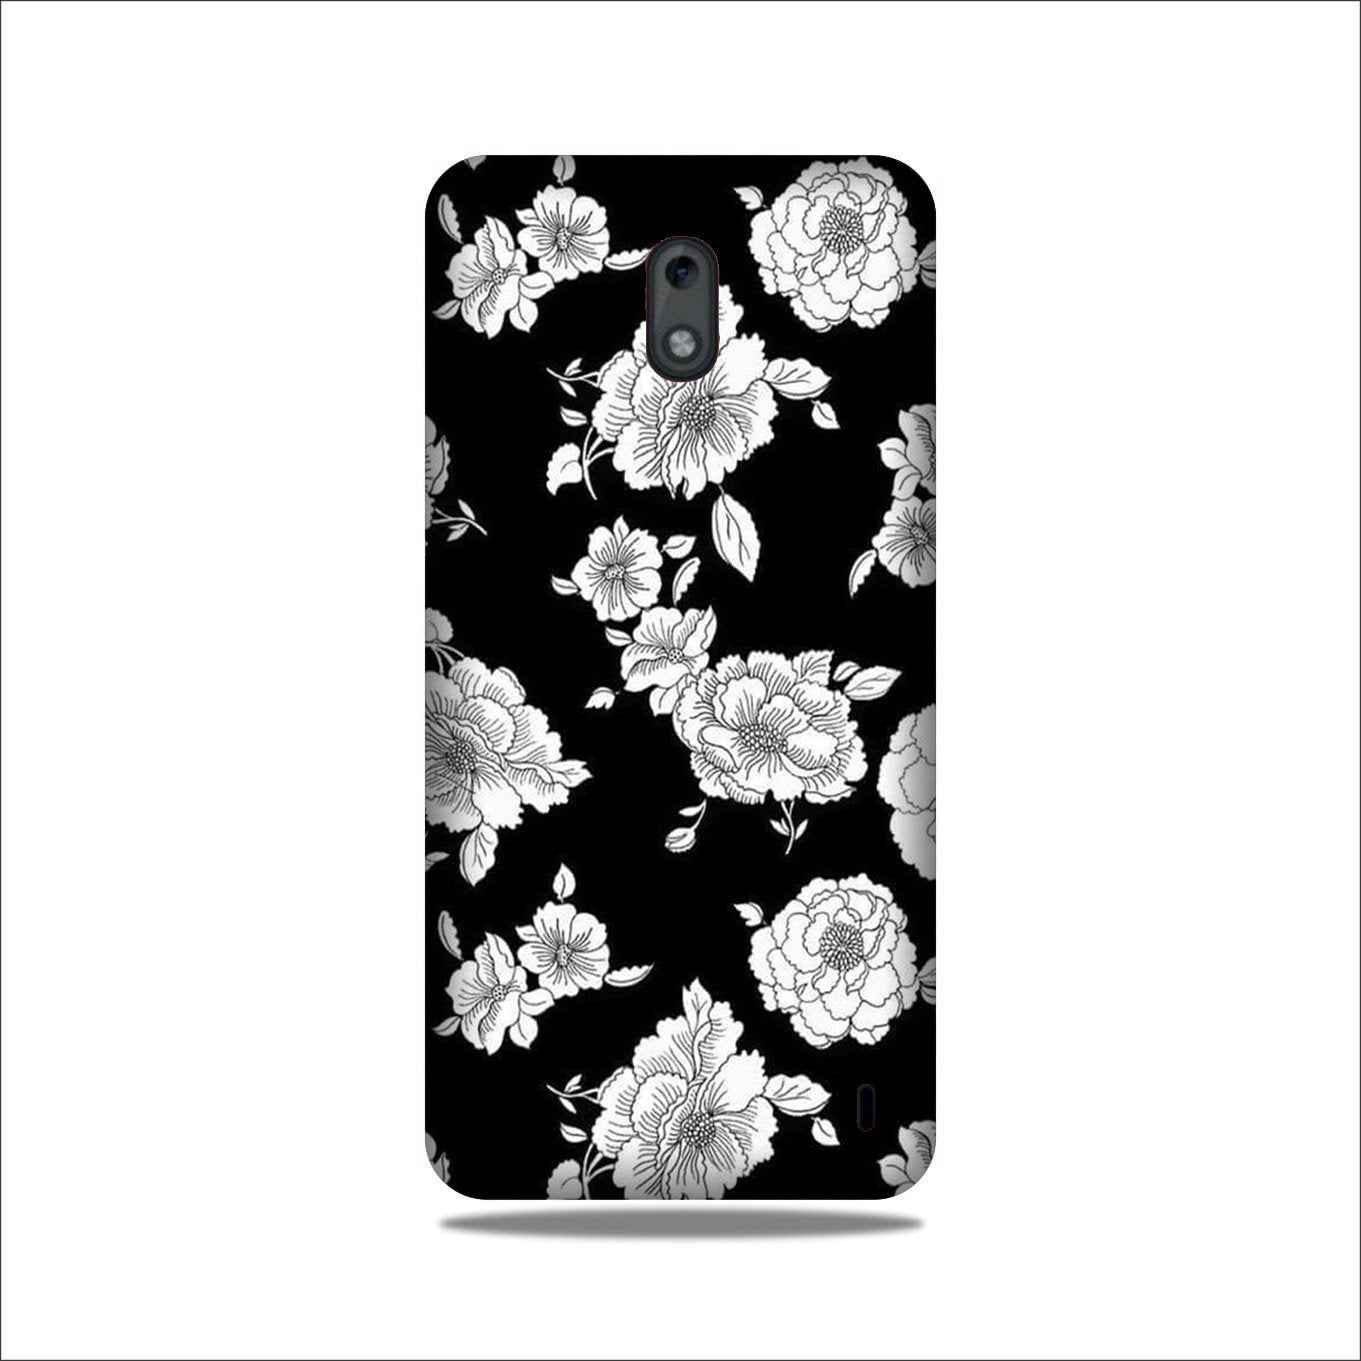 White flowers Black Background Case for Nokia 2